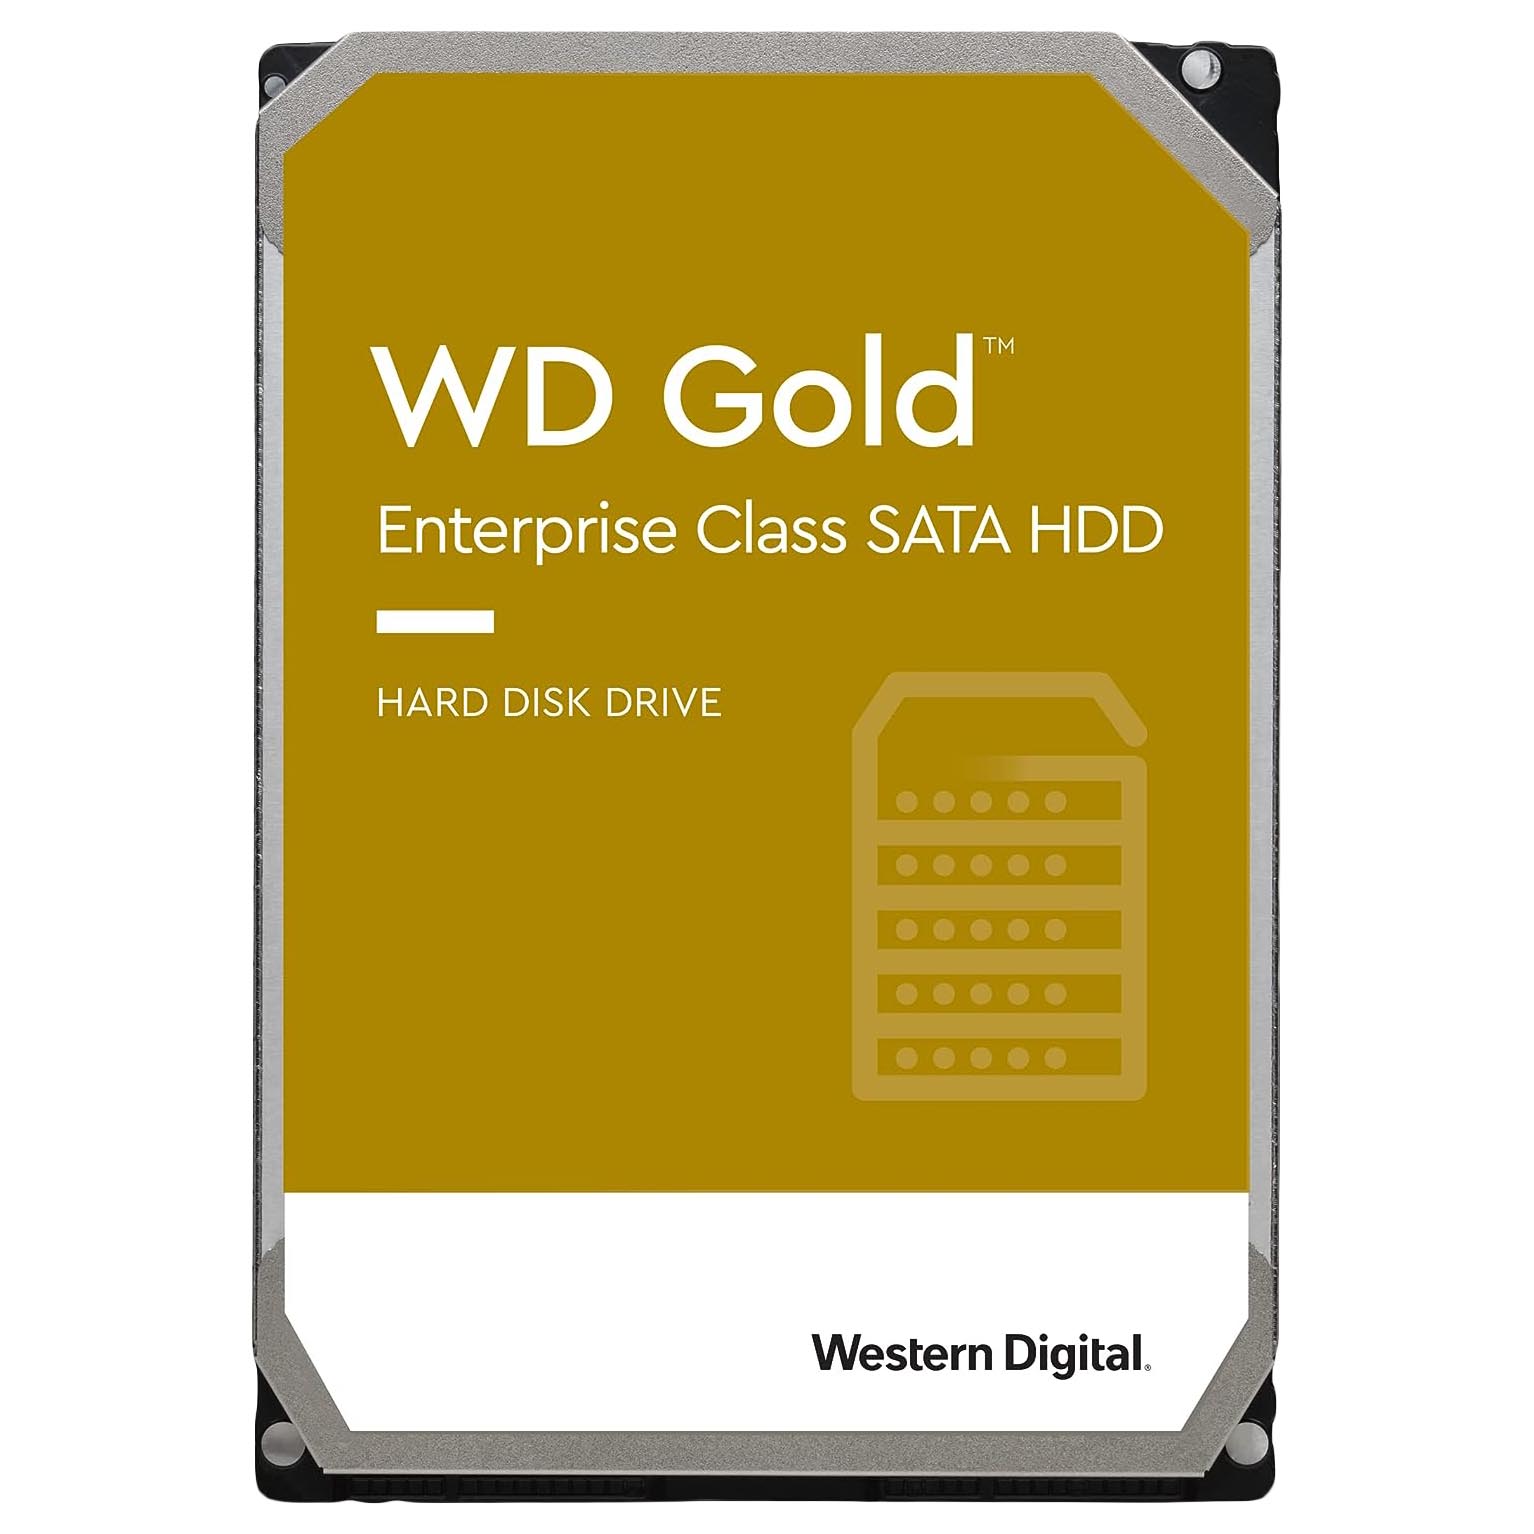 Внутренний жесткий диск Western Digital WD Gold Enterprise Class, WD102VRYZ, 10Тб жесткий диск western digital wd gold 6 тб 3 5 wd6003fryz